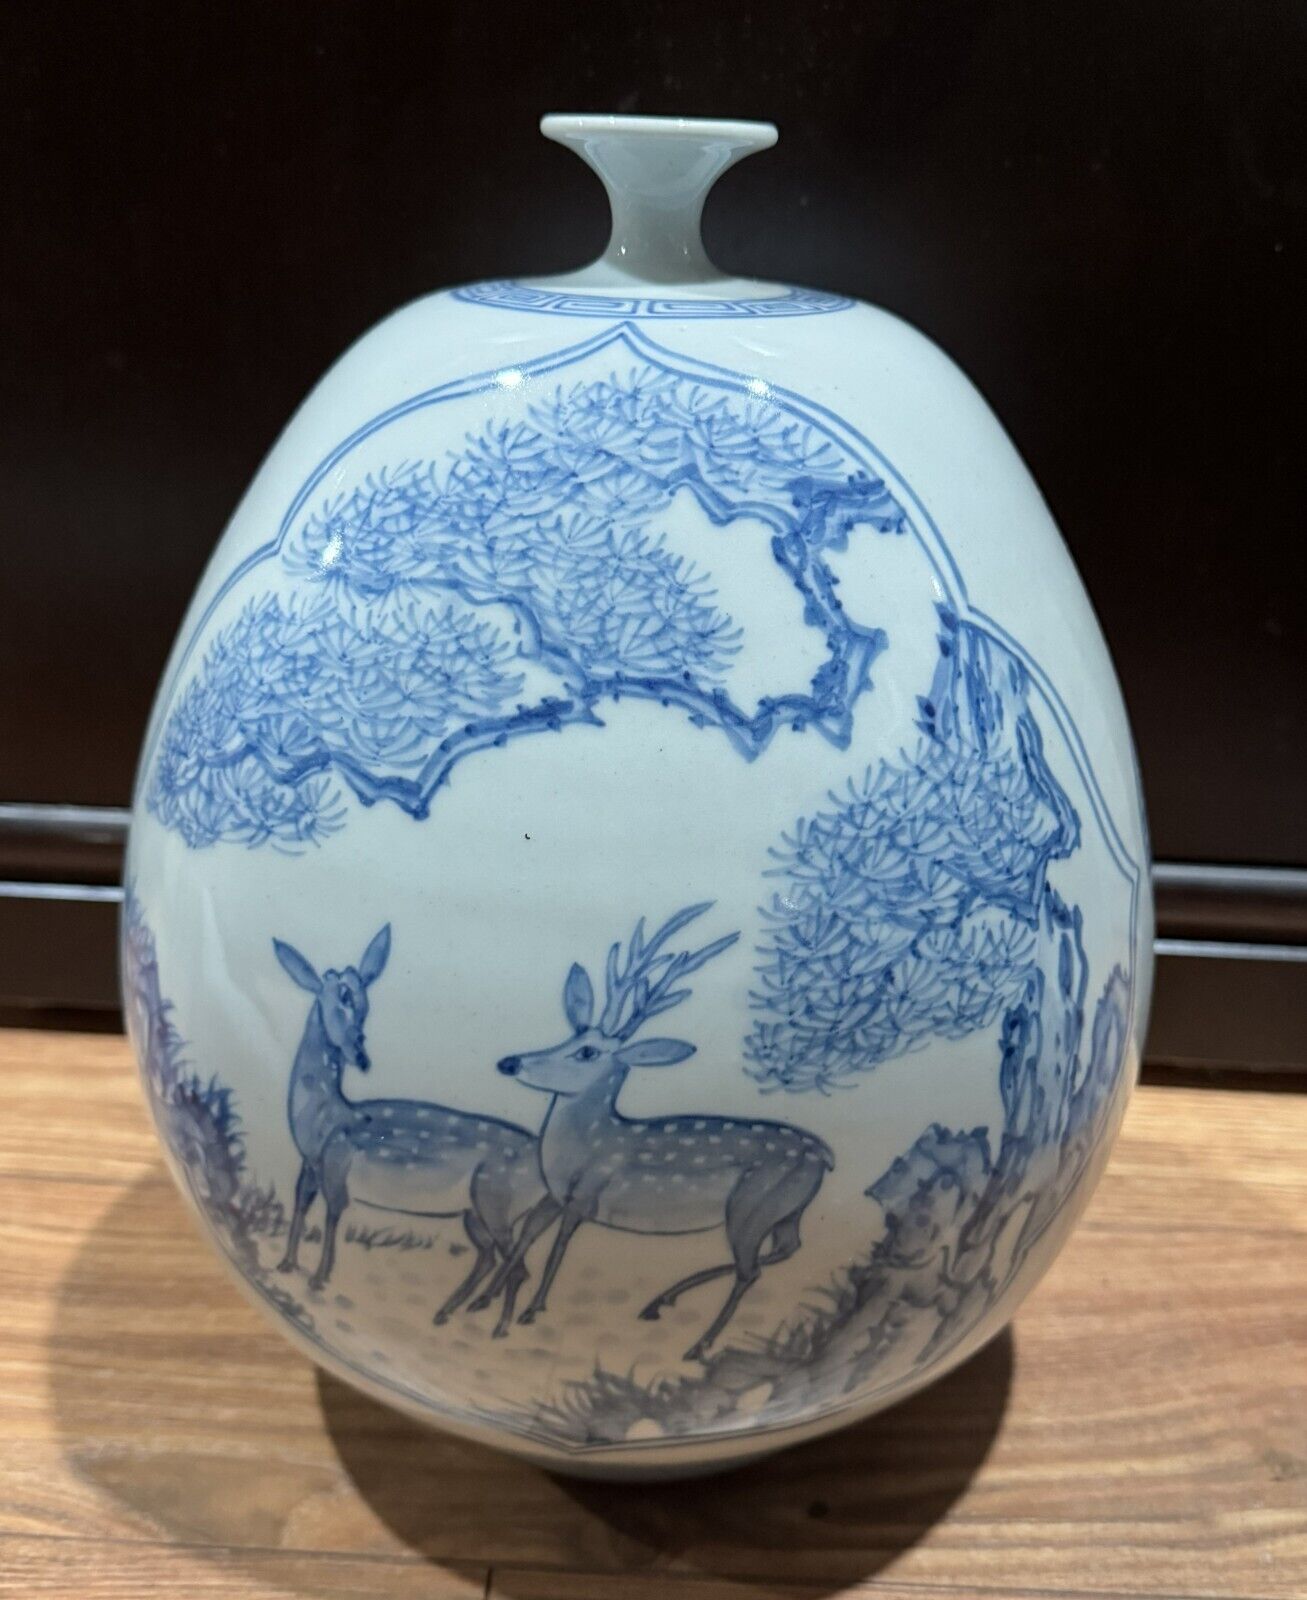 Vintage Korean Pottery Vase with Underglaze Blue Decoration and Signed